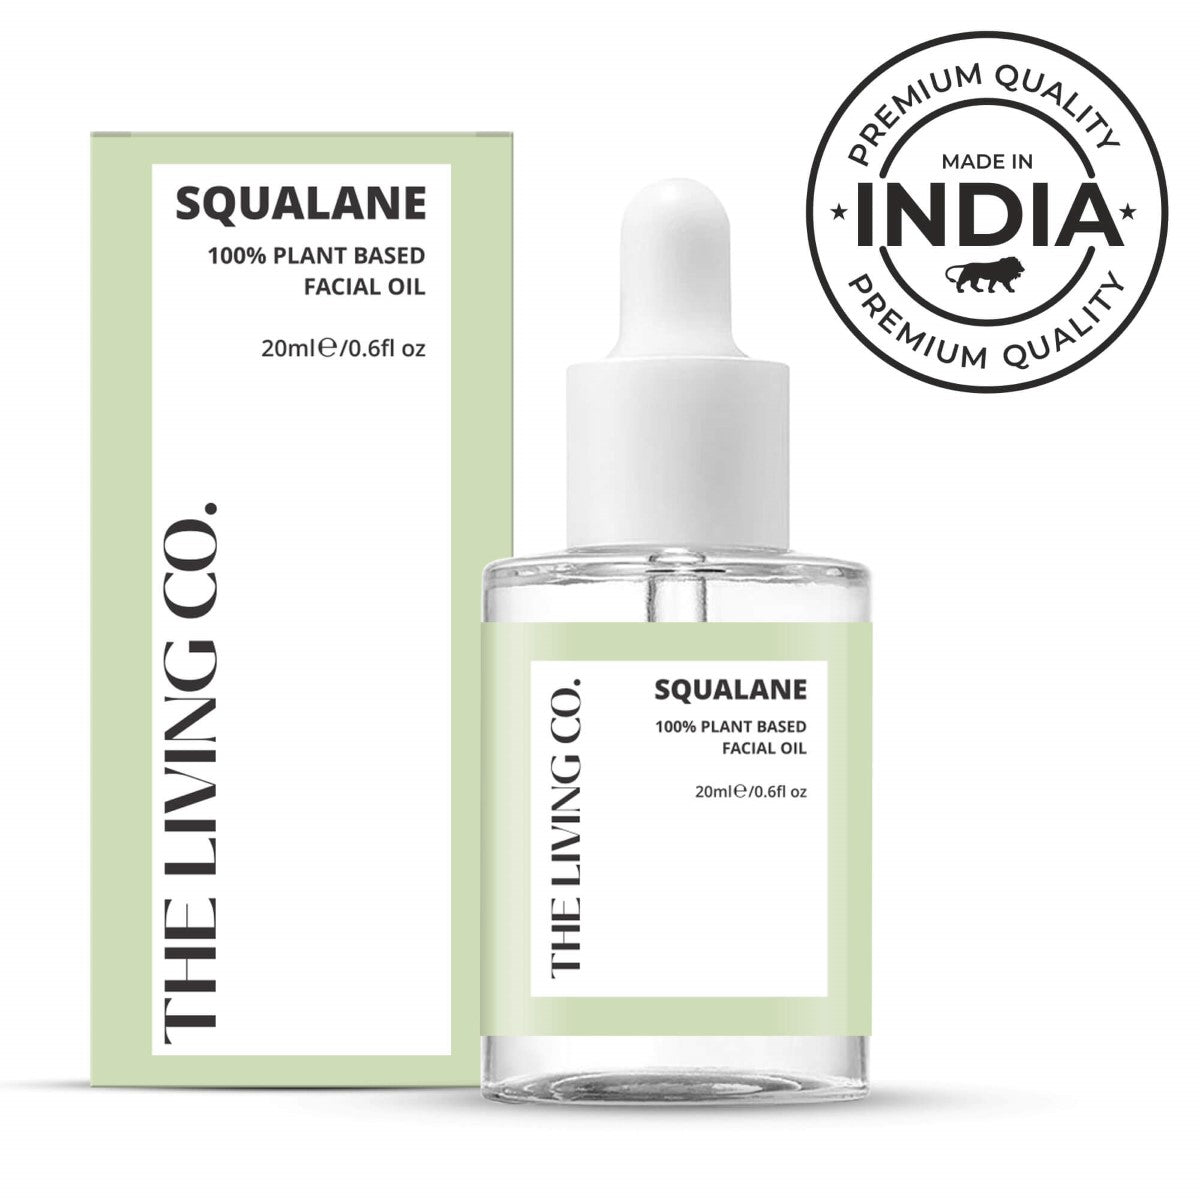 Squalane 100% Plant Based Facial Oil